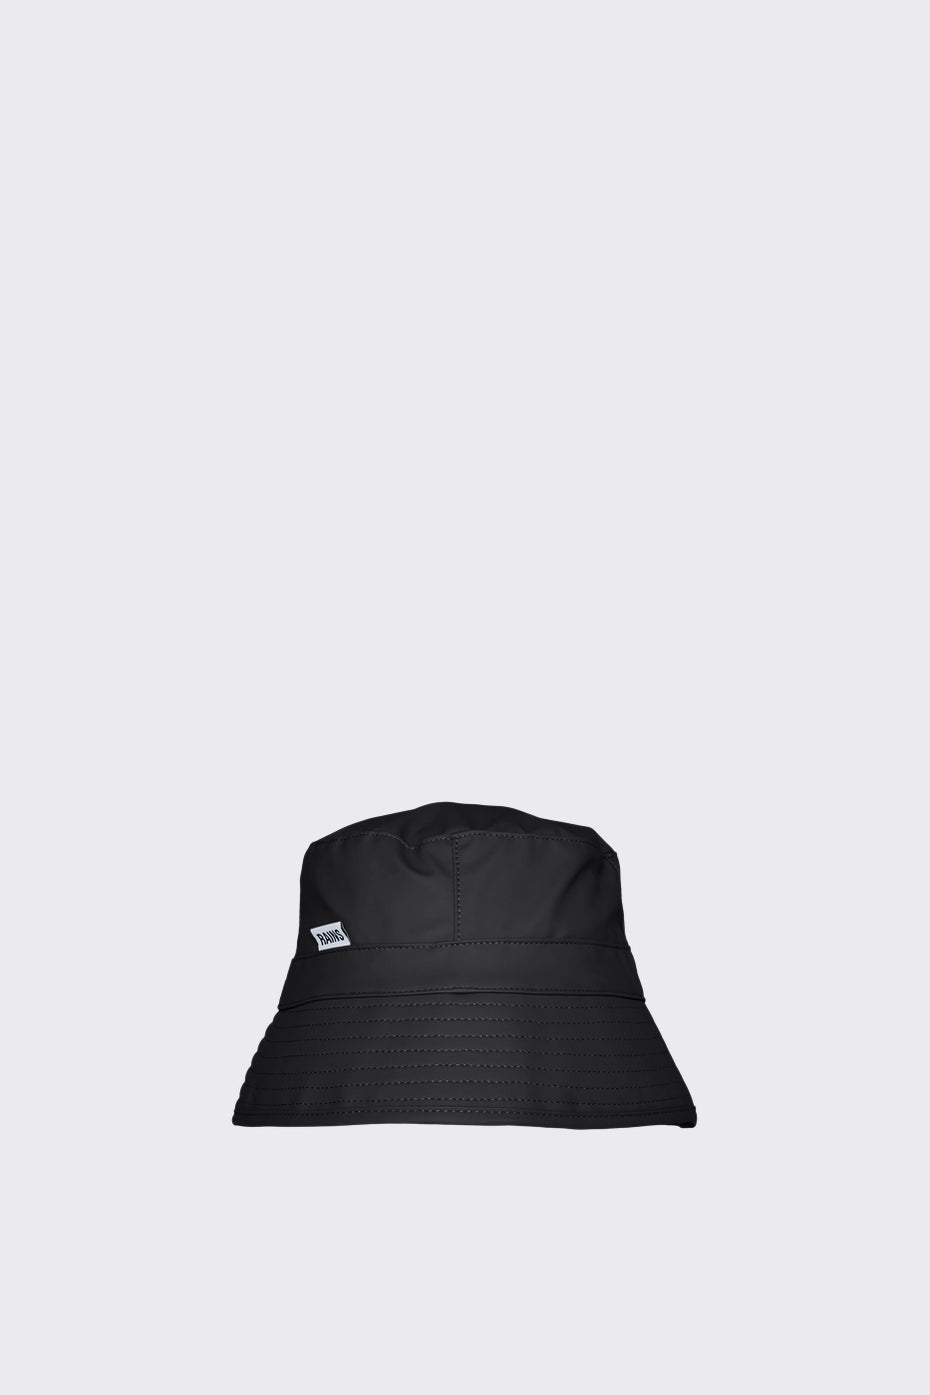 Rains Black 20010 Bucket Hat